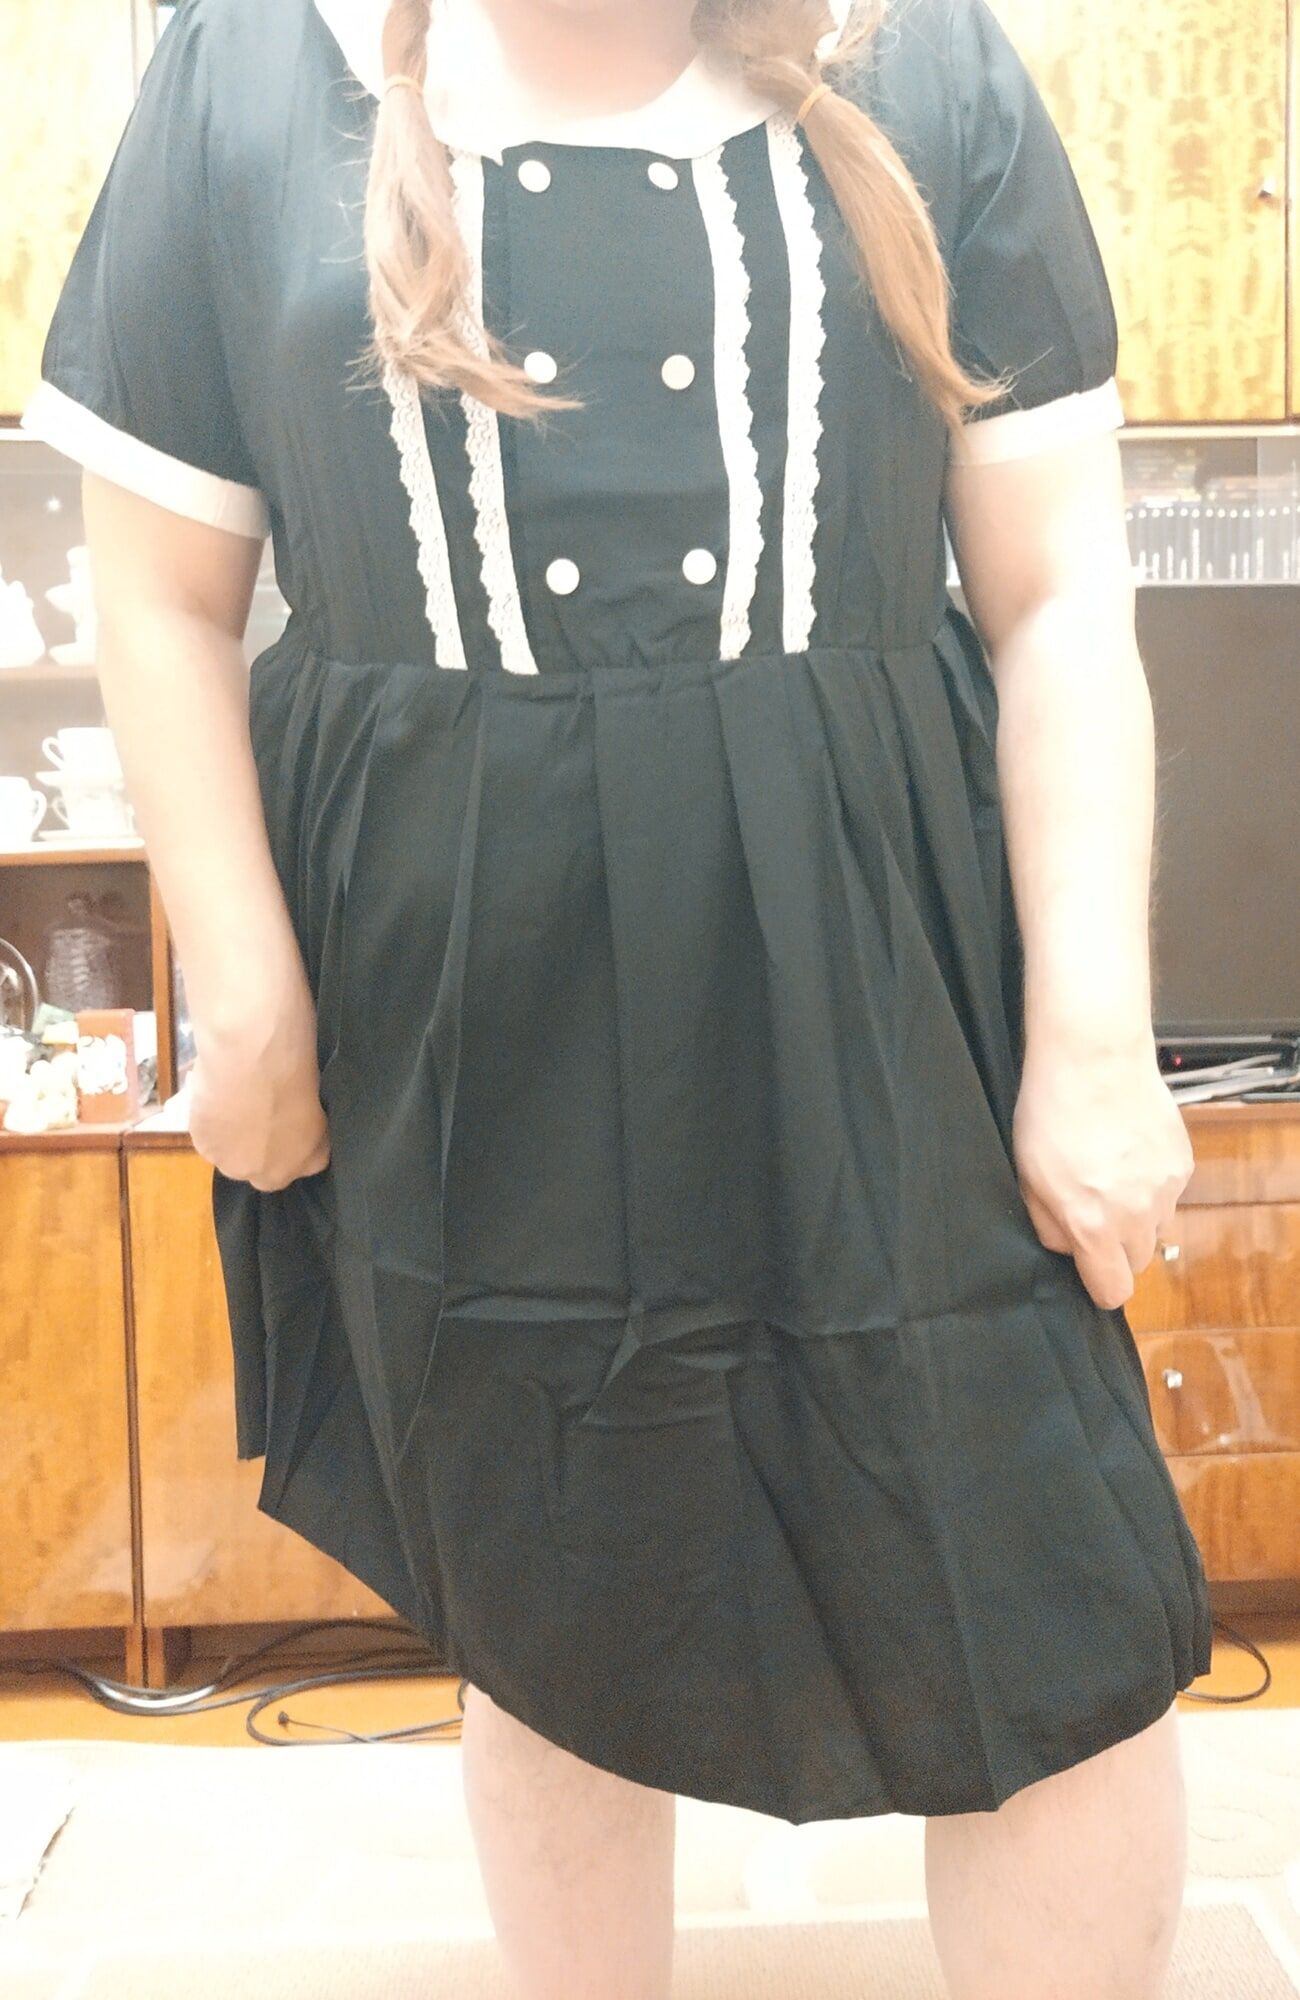 sissy Aleksa posing in new black dress #7